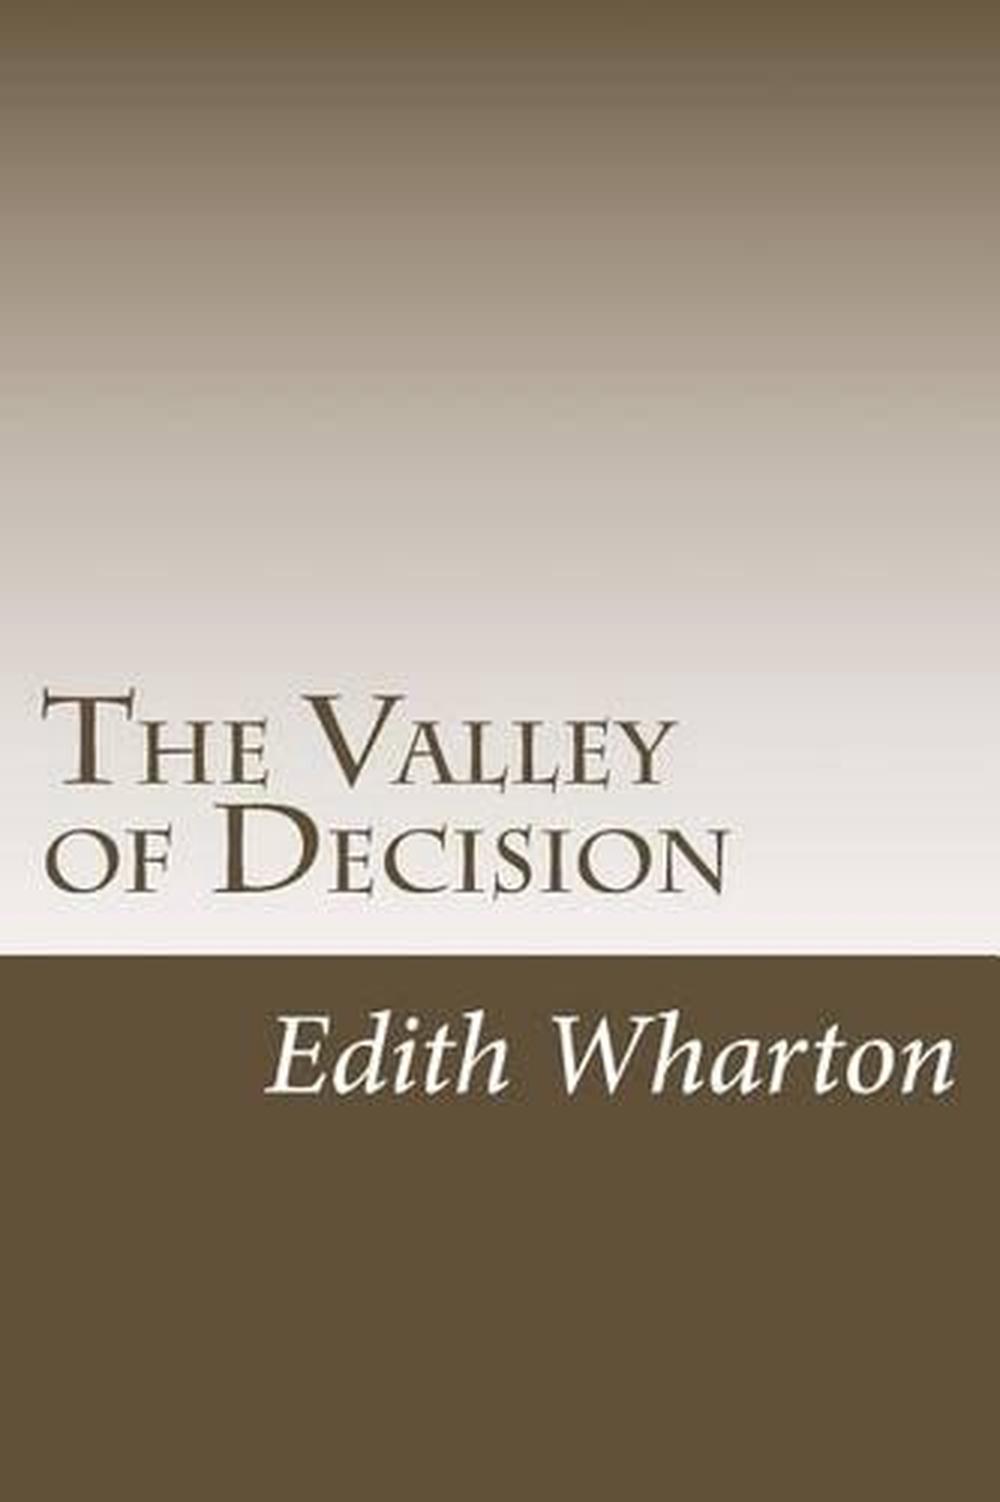 wharton round 2 decisions